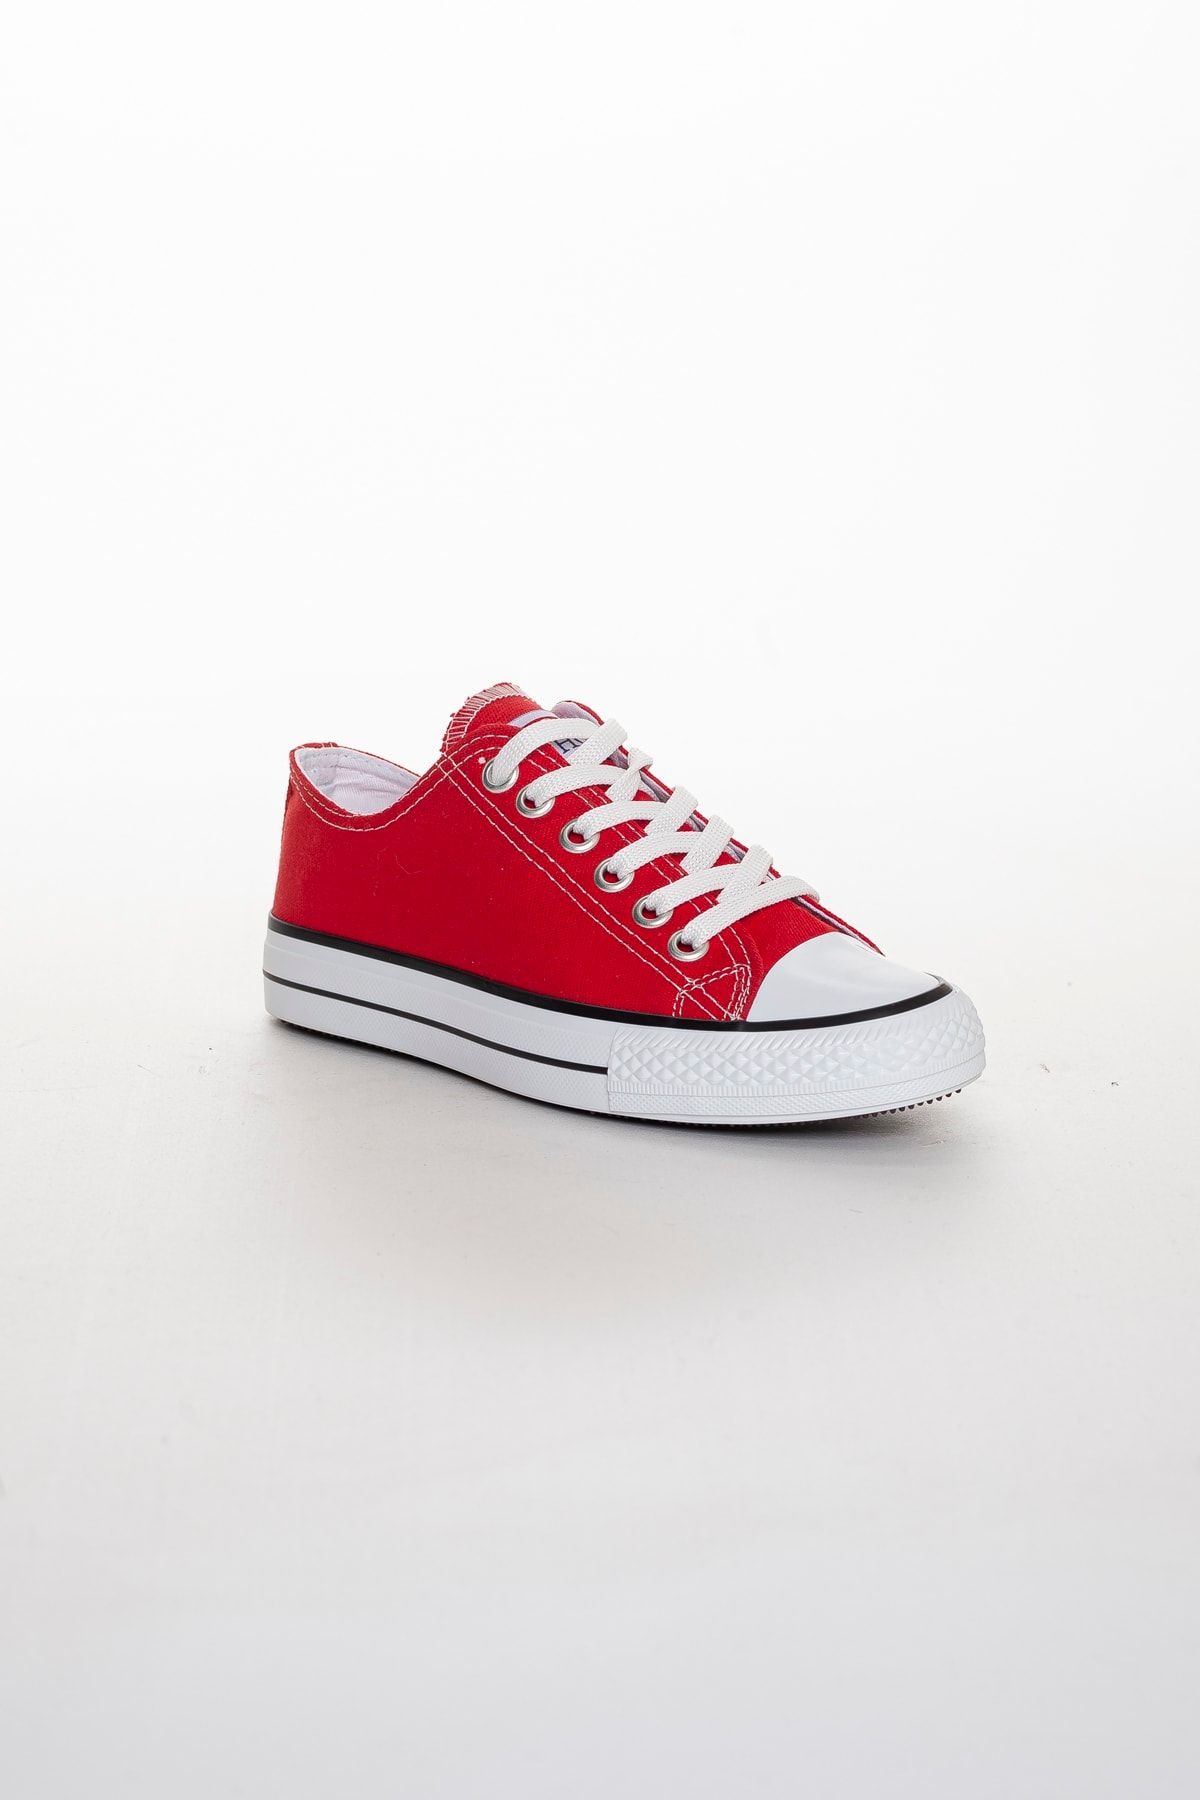 Odal Shoes Unisex Kırmızı Ortopedik Şeritli Sneakers Cnvrs3579746